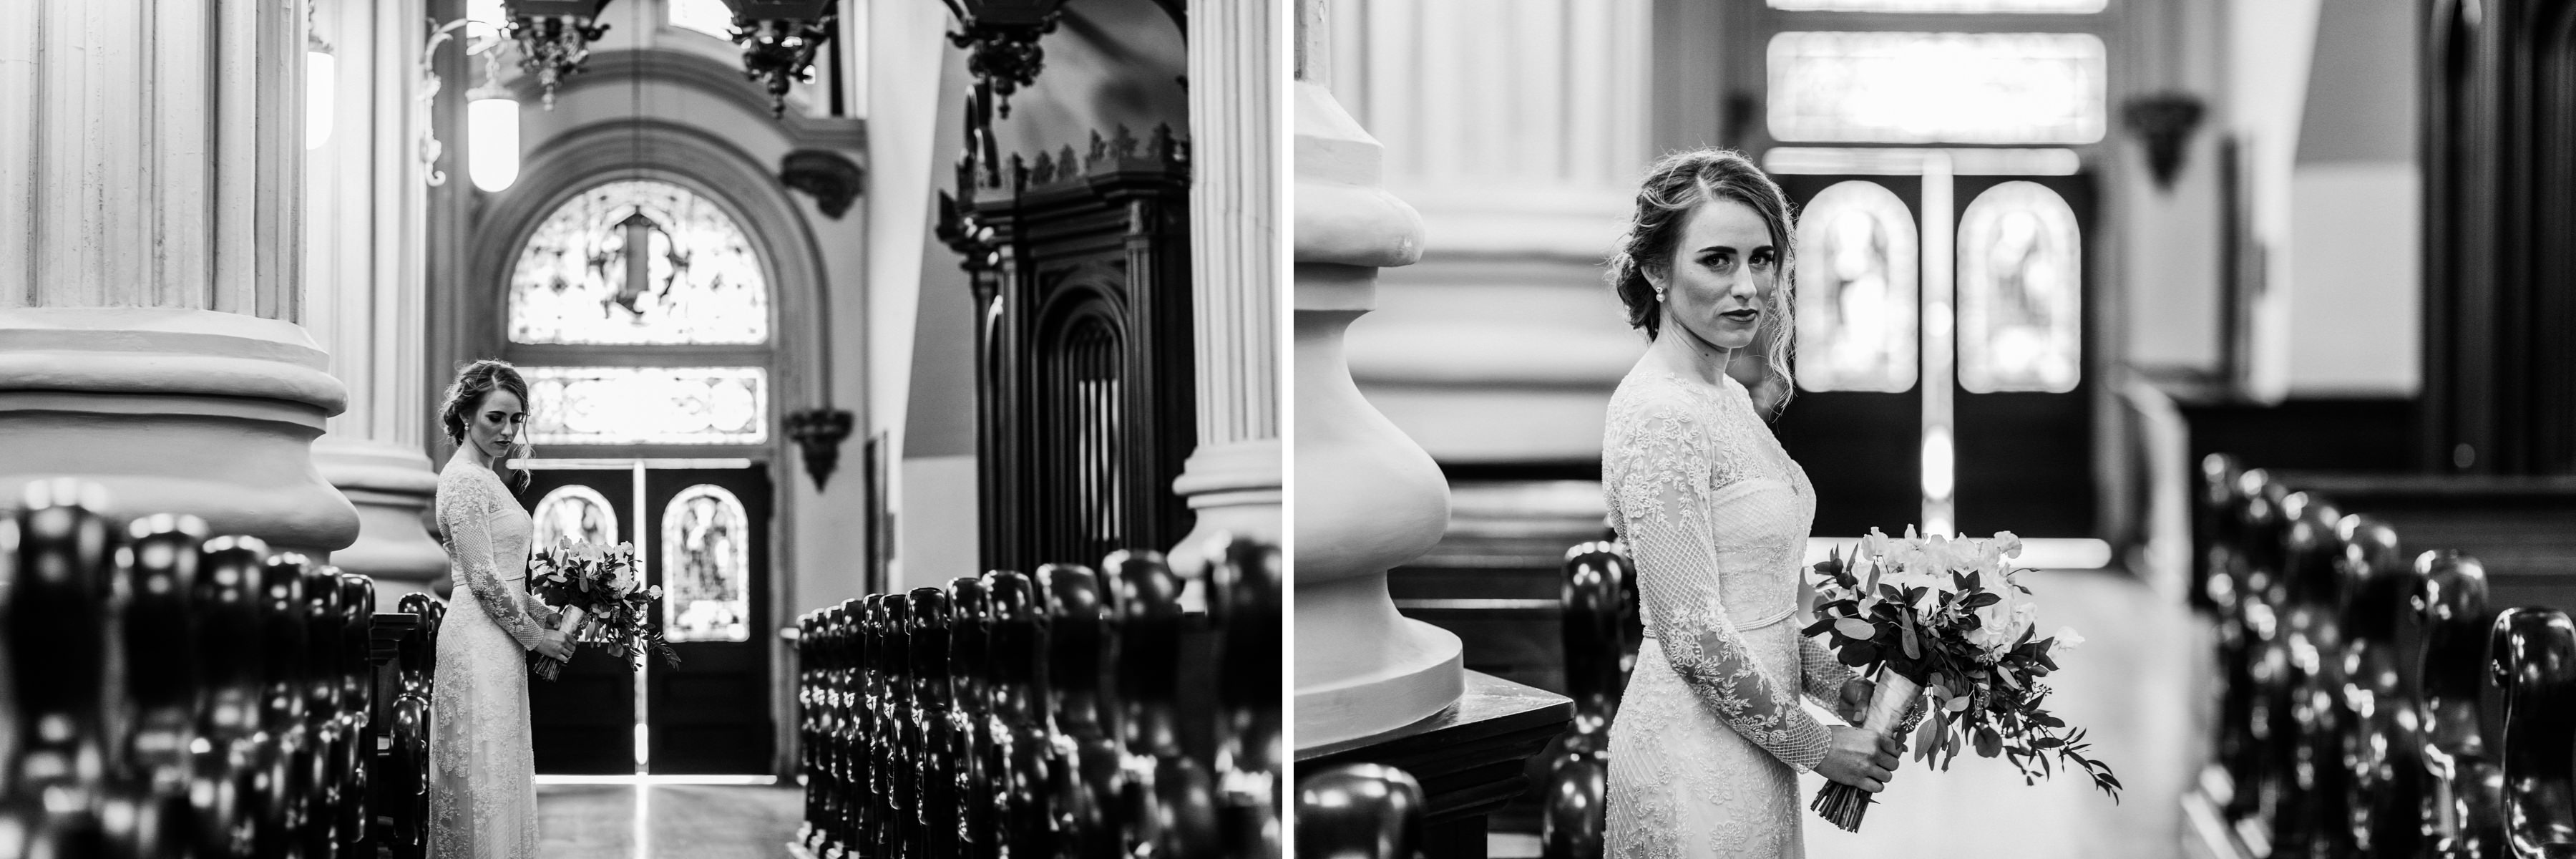 MULLET_WEDDING_NEW_ORLEANS_LOUISIANA_WEDDING_PHOTOGRAPHY_40